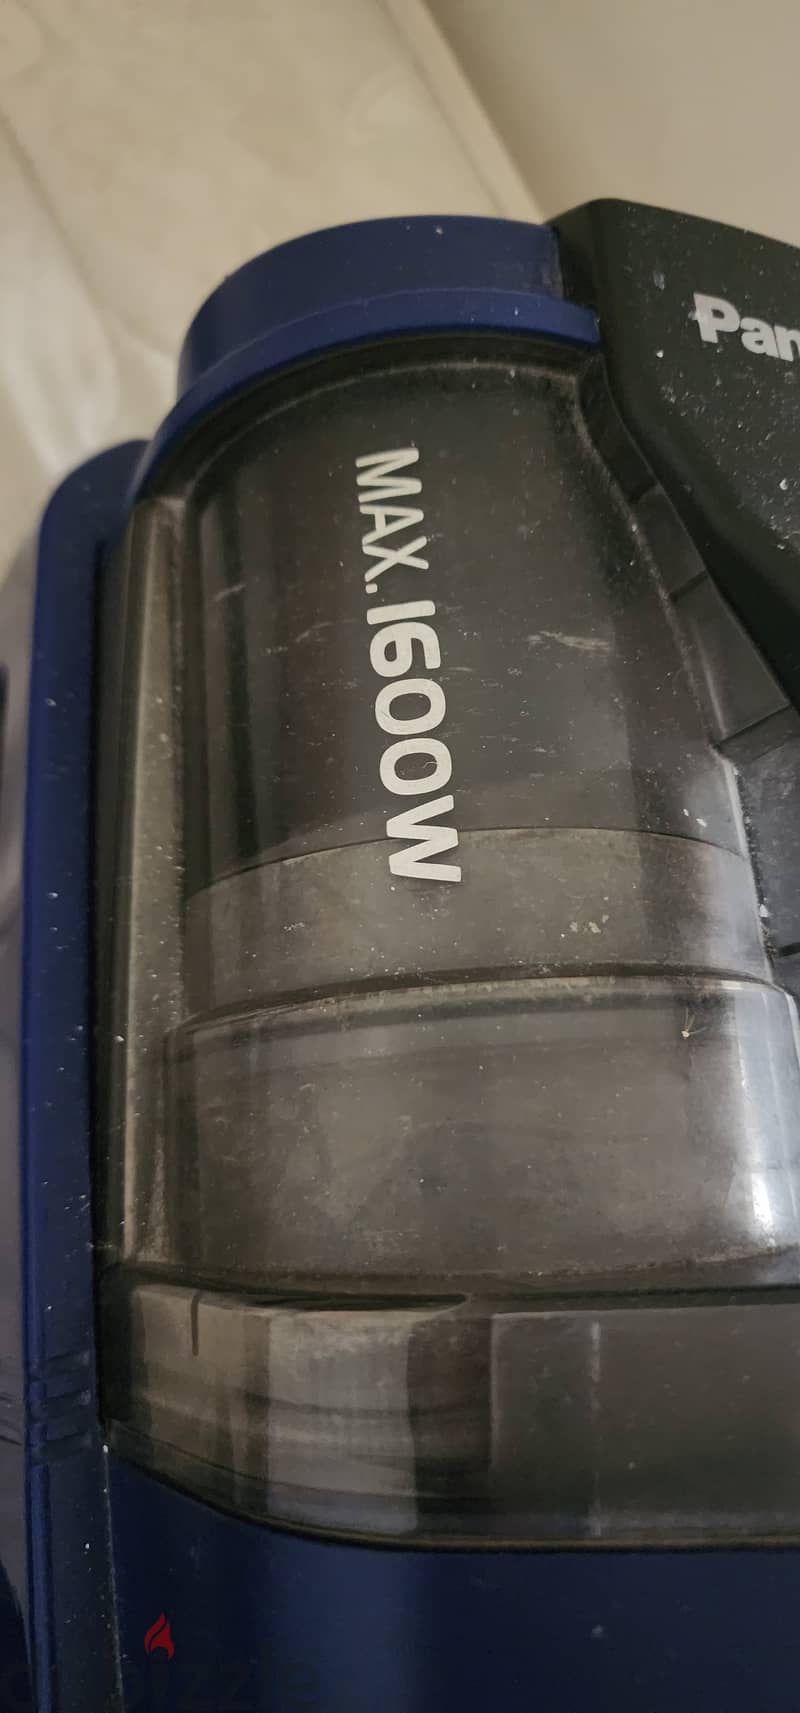 Panasonic vacuum cleaner 2